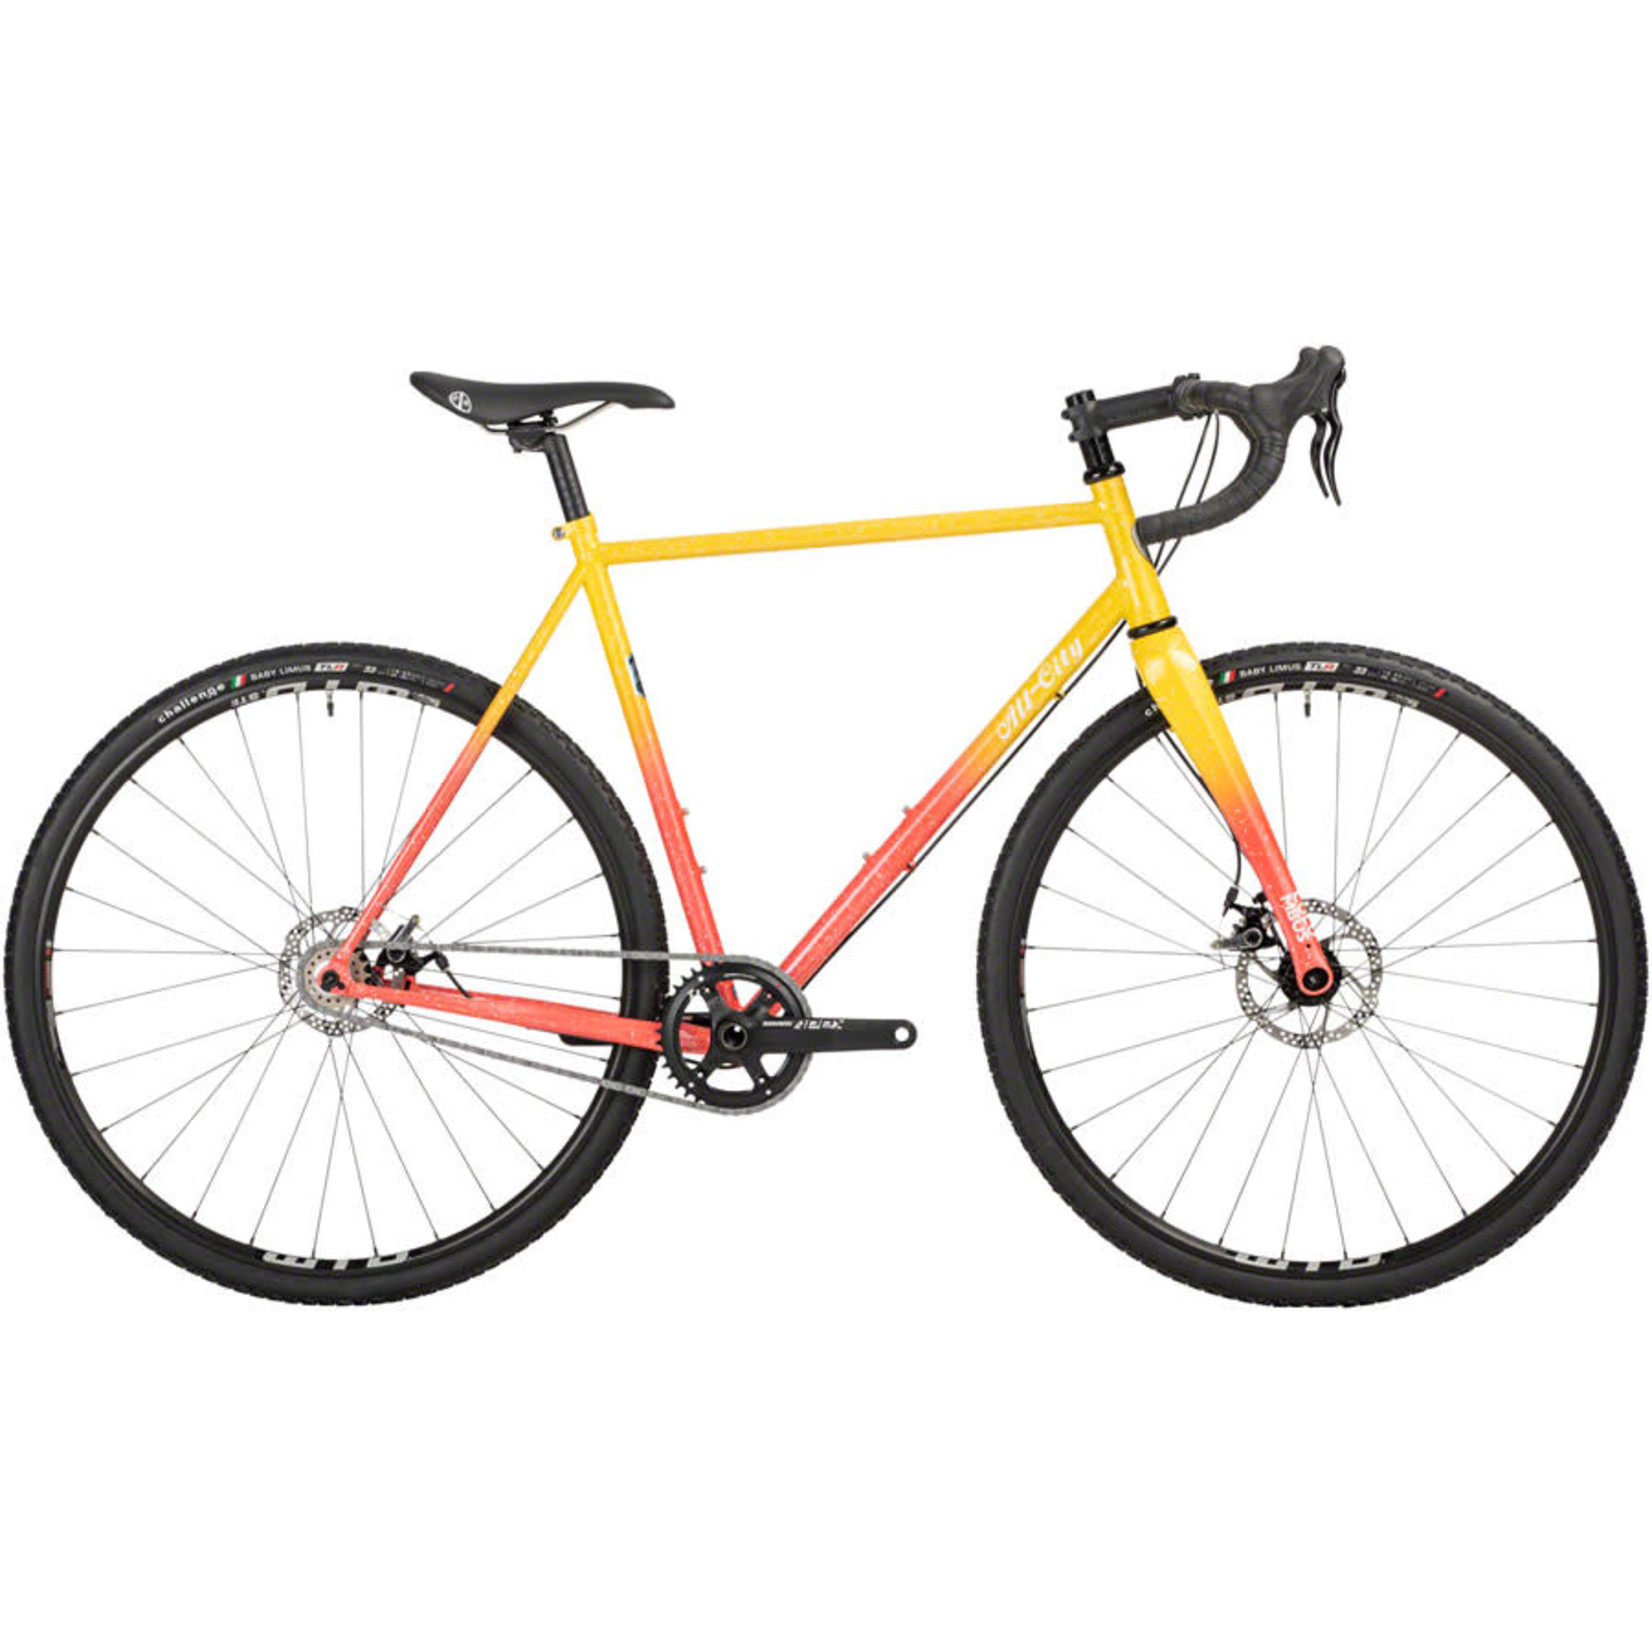 All-City All-City Nature Cross Single Speed Bike - 700c, Steel, Pink Lemonade